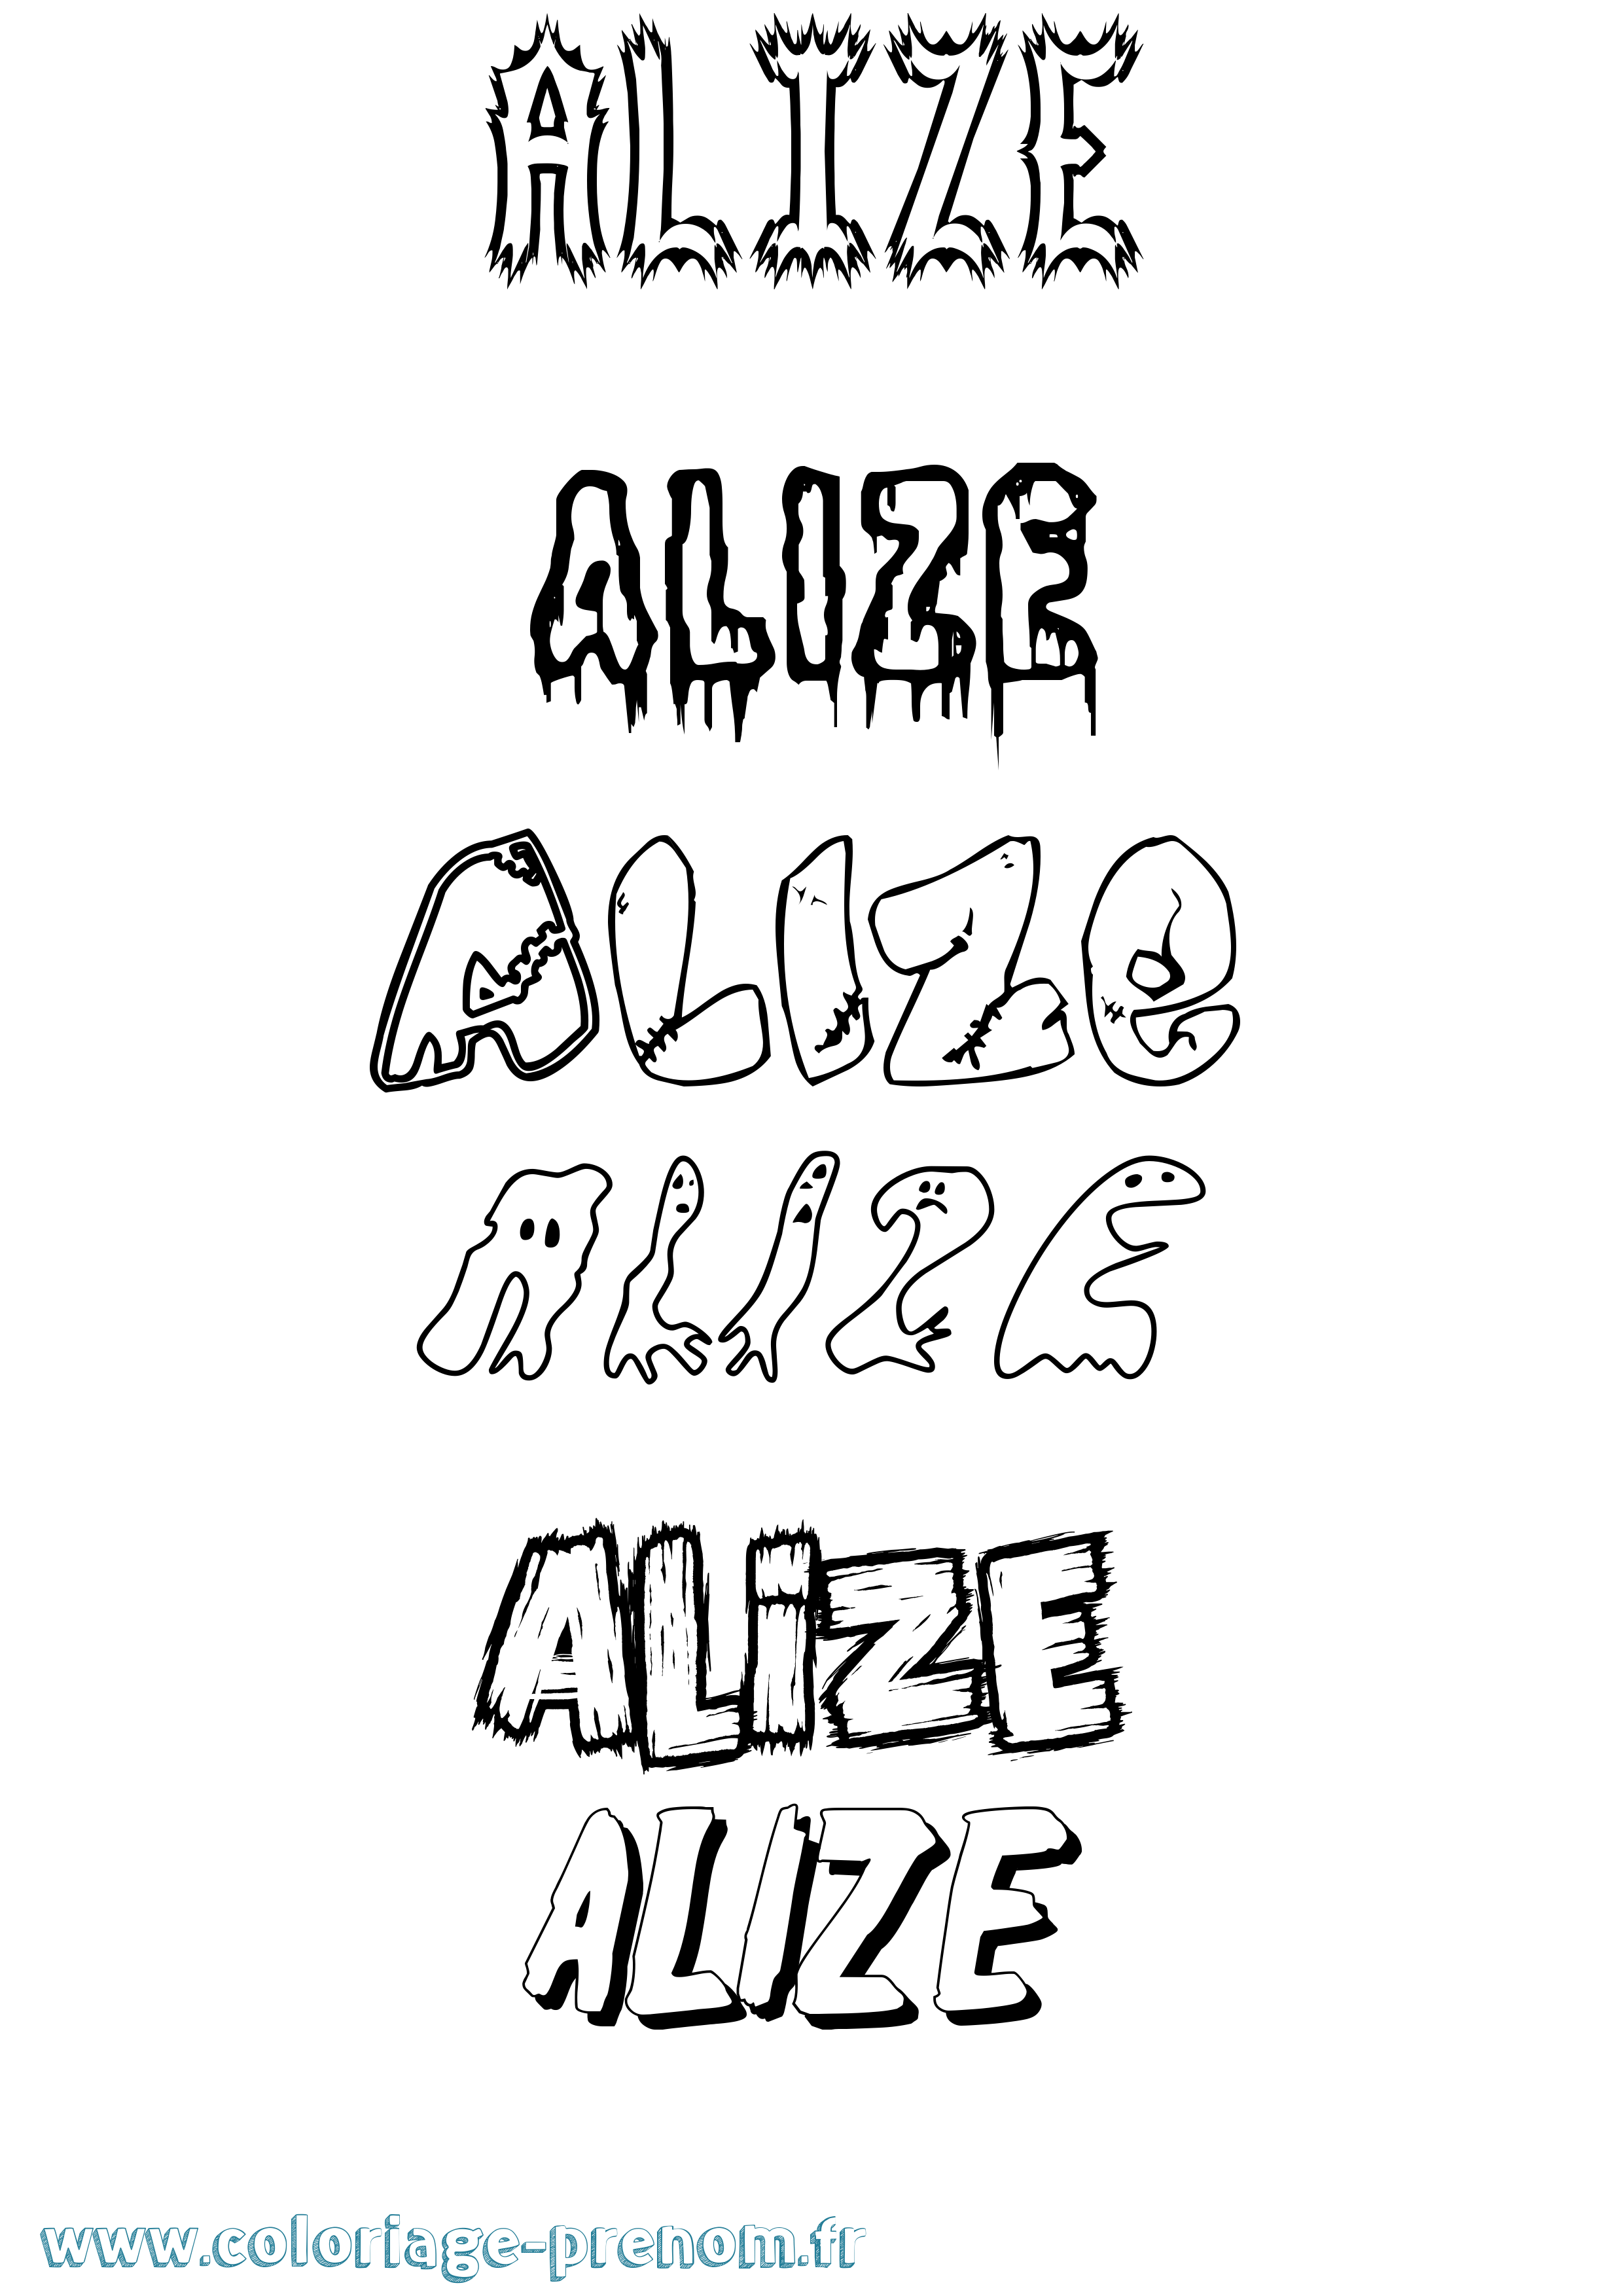 Coloriage prénom Alize Frisson